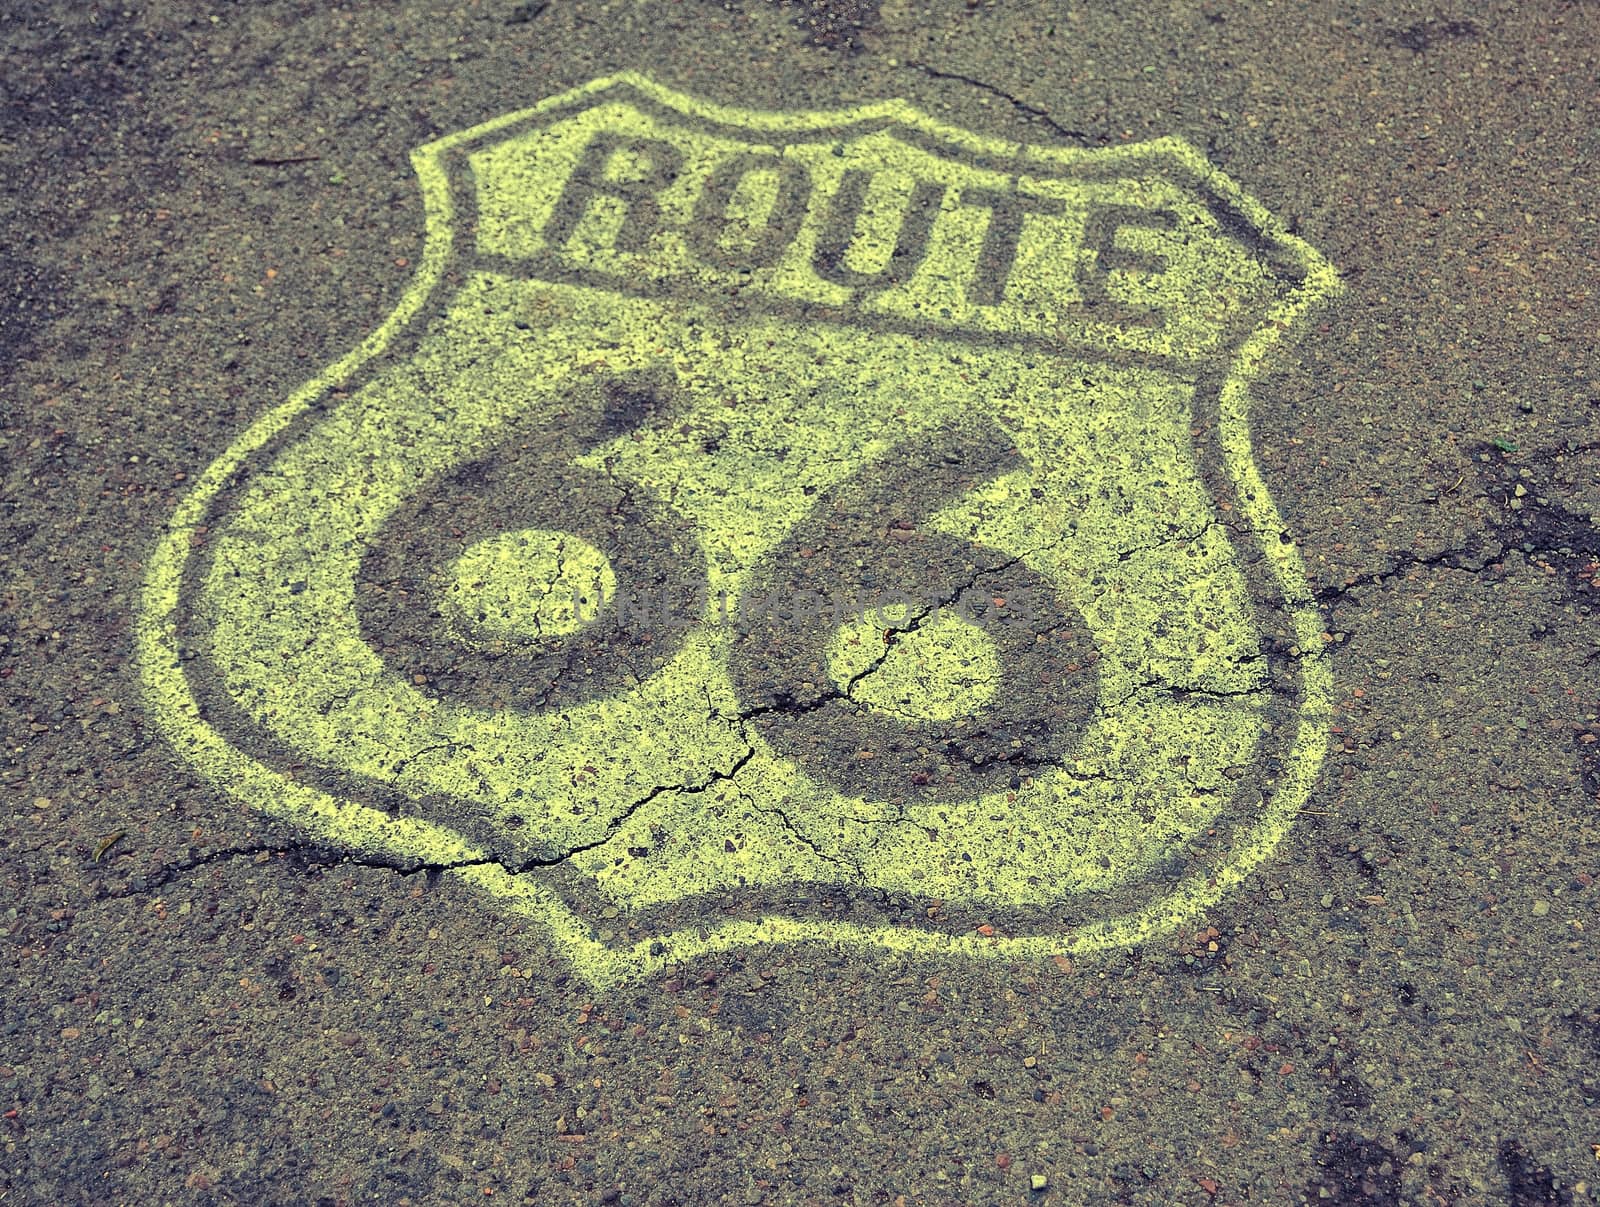 Historic U.S. old Route 66 sign on the asphalt.